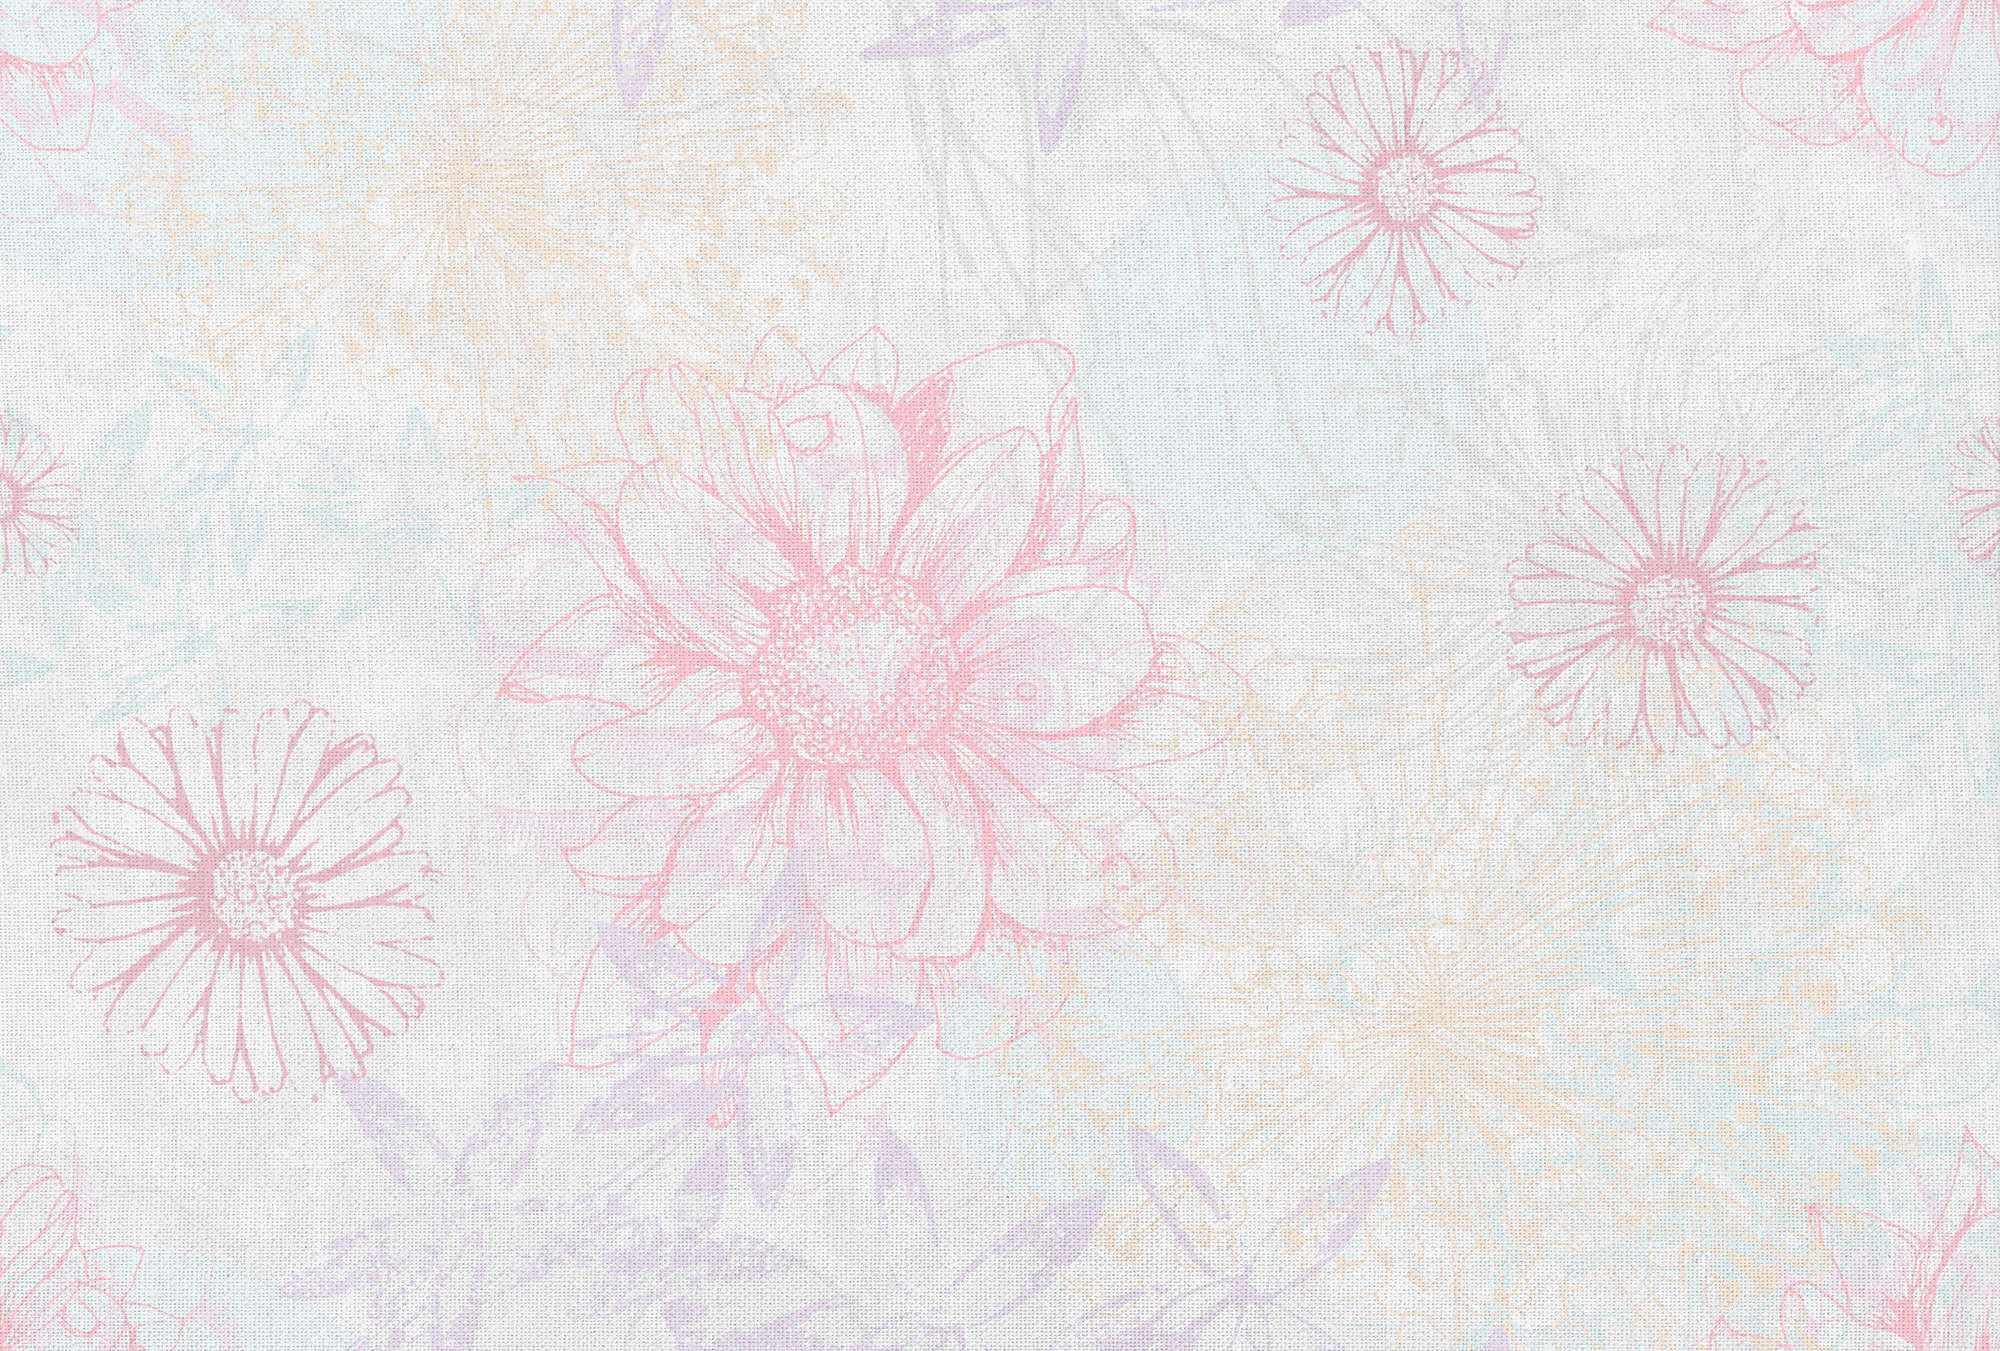             Fototapete mit Leinenoptik & Blütenmuster – Rosa, Weiß, Blau
        